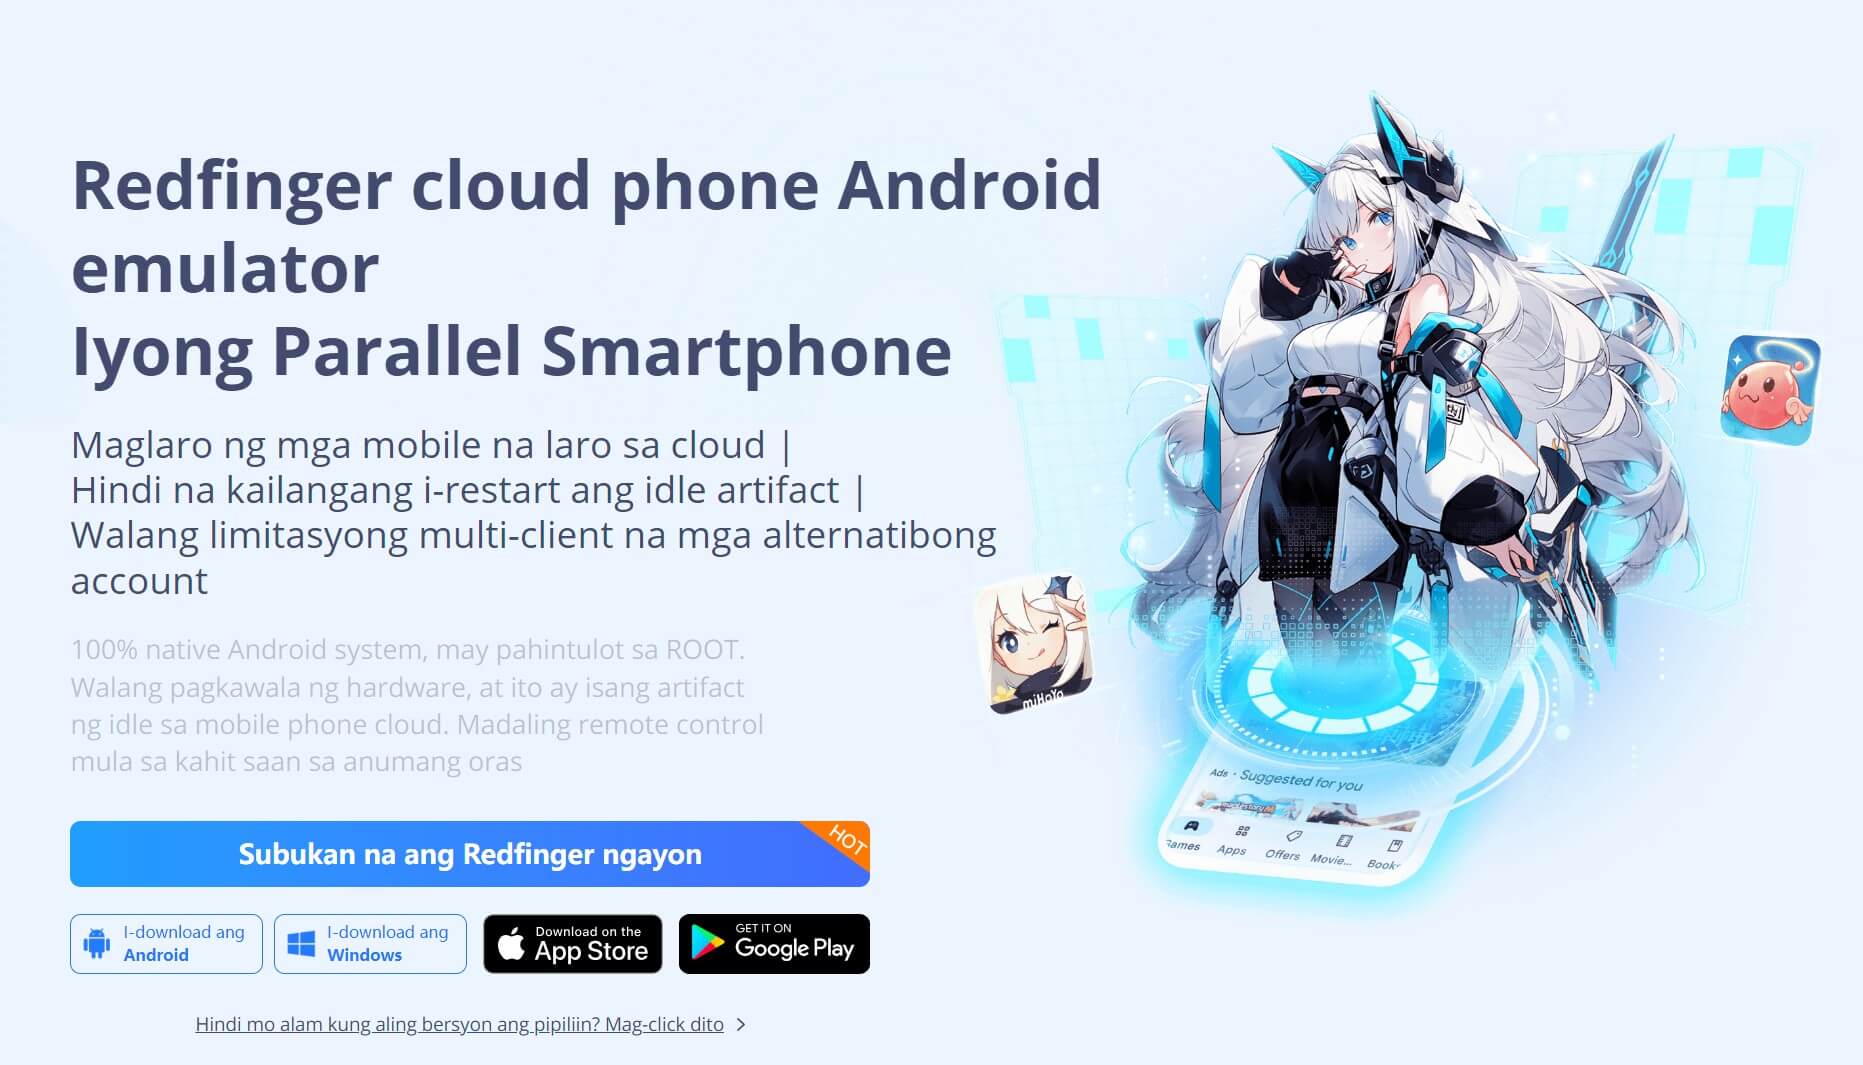 redfinger cloud phone official website